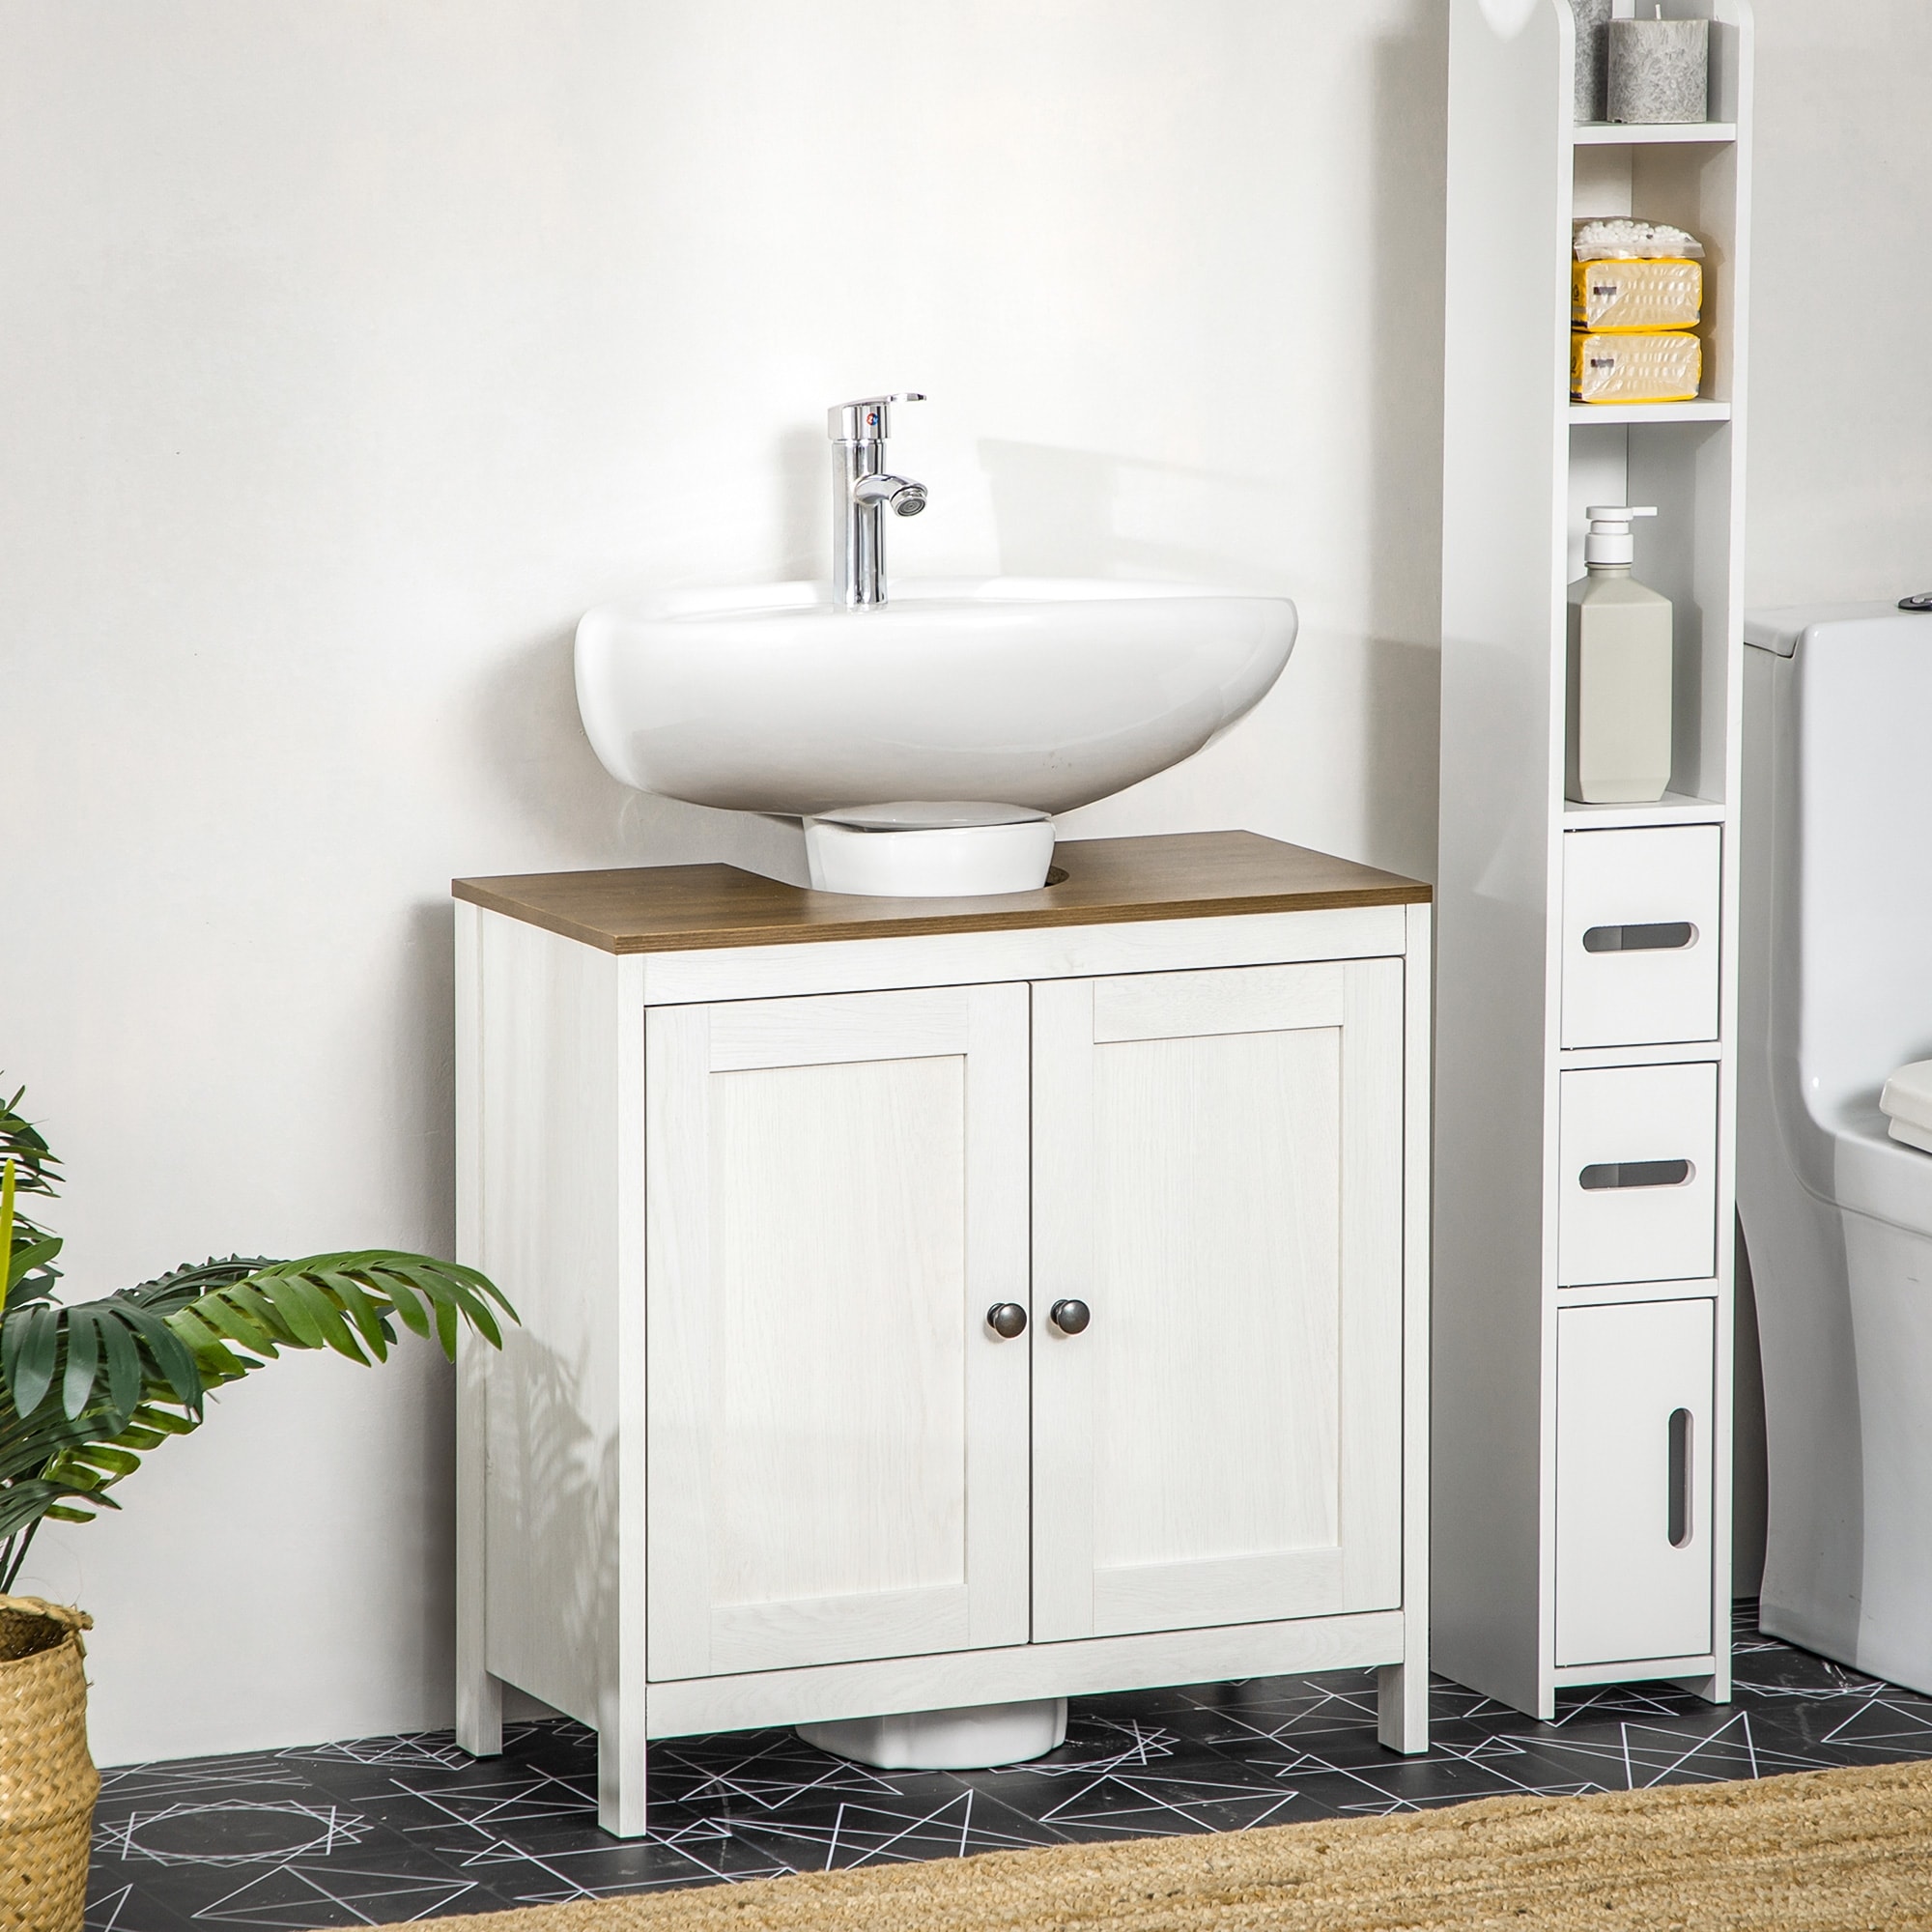 https://ak1.ostkcdn.com/images/products/is/images/direct/96a9892202b2183ac5872281b175d7123974bdf7/kleankin-Modern-Bathroom-Sink-Cabinet%2C-Freestanding-Storage-Cupboard-with-Adjustable-Shelf%2C-Antique-White.jpg